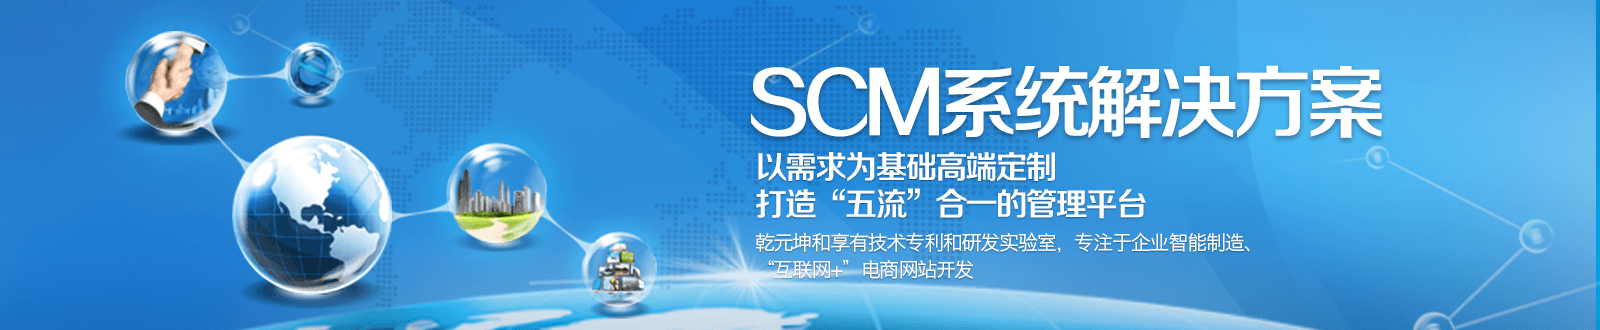 SCM系统解决方案